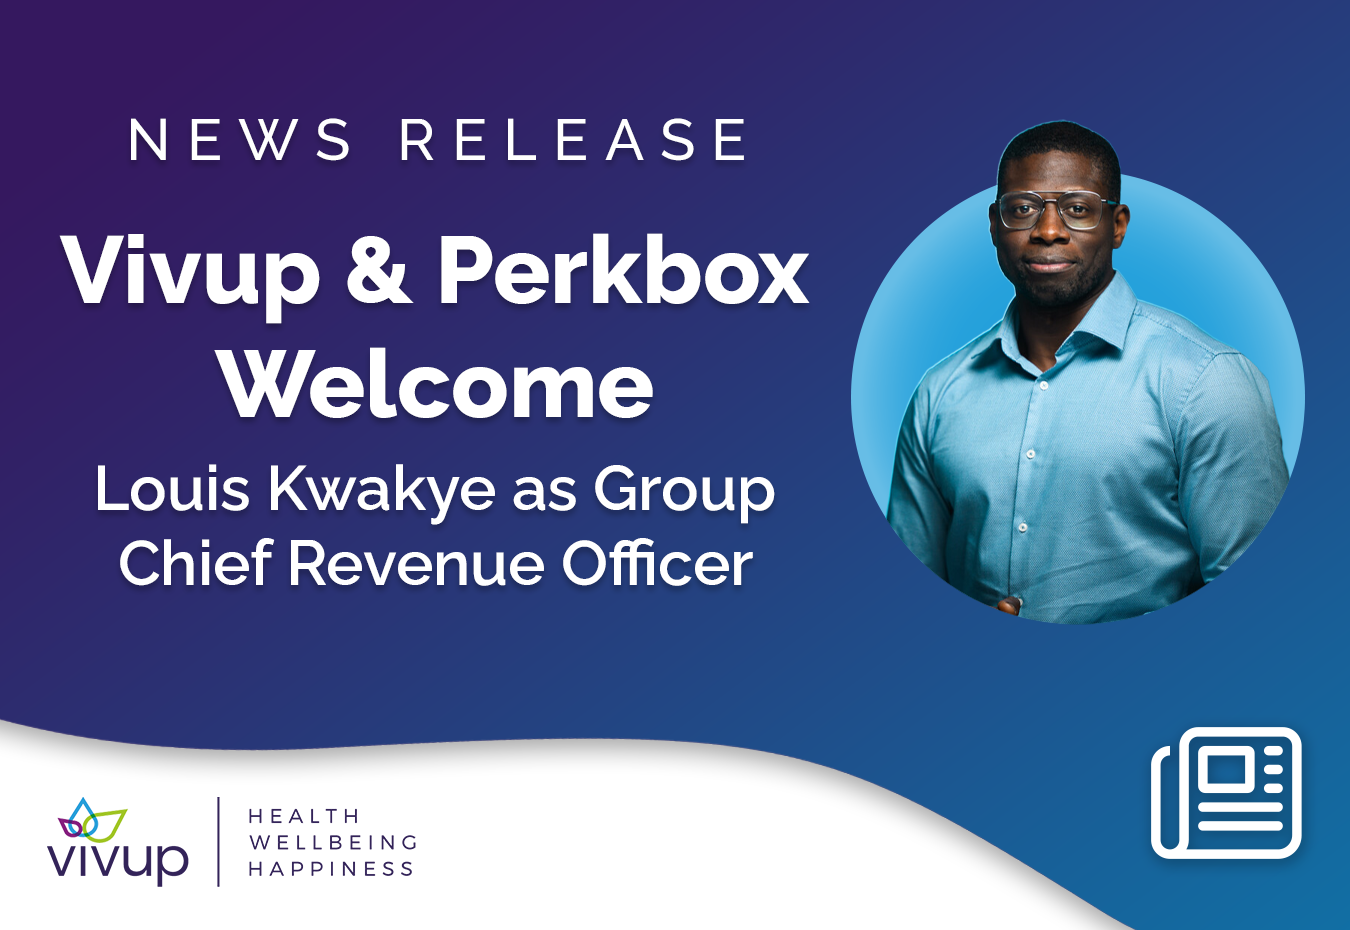 Perkbox and Vivup hire Louis Kwakye from Reward Gateway in C-Suite hire